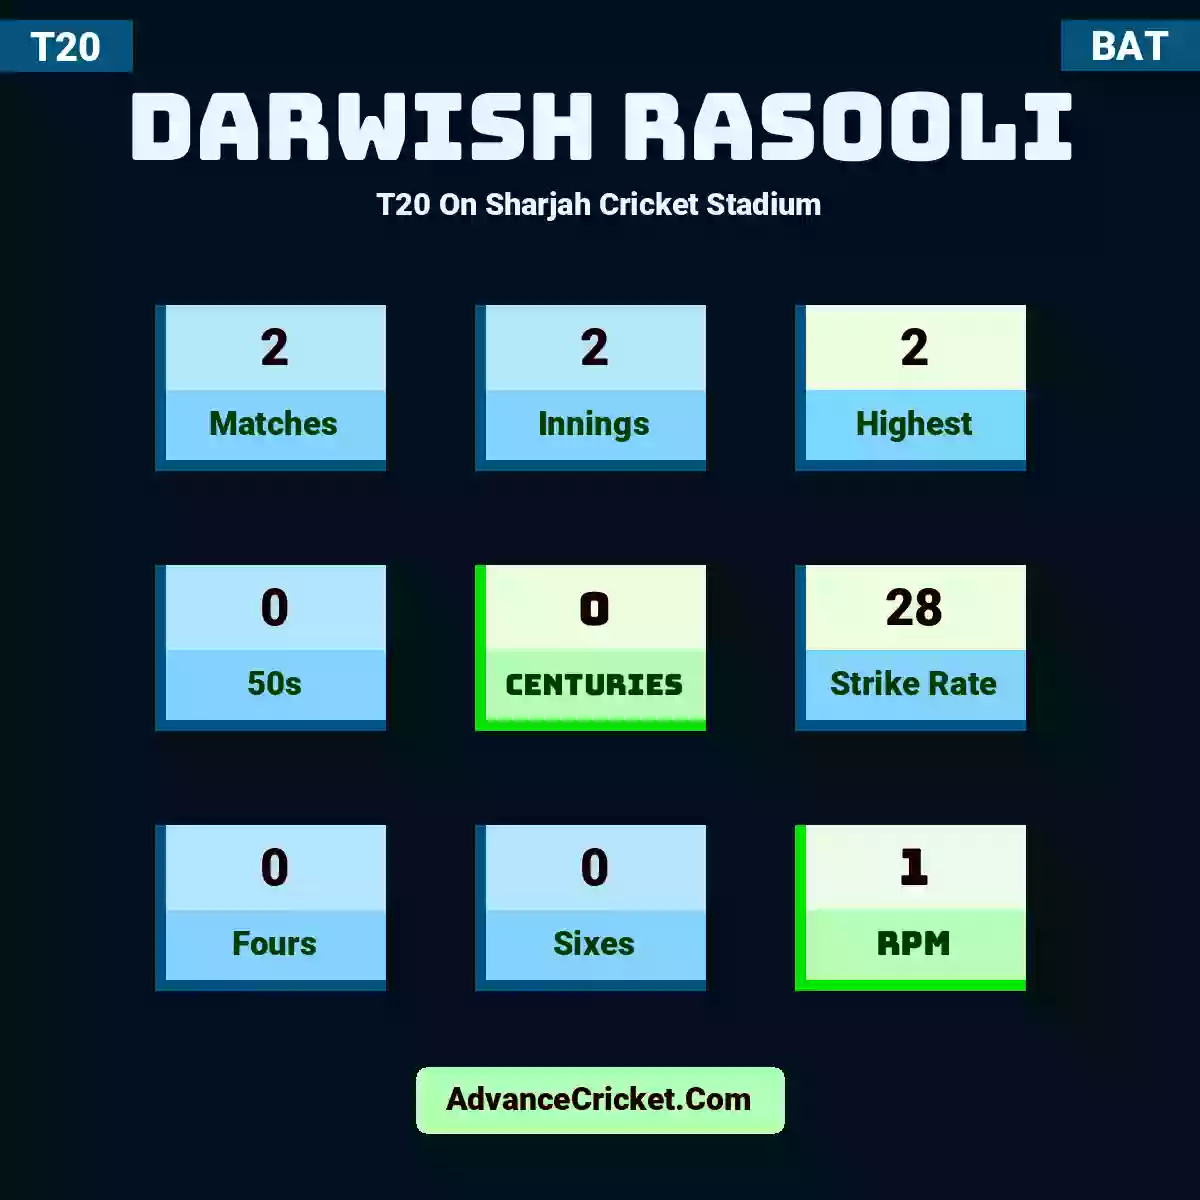 Darwish Rasooli T20  On Sharjah Cricket Stadium, Darwish Rasooli played 2 matches, scored 2 runs as highest, 0 half-centuries, and 0 centuries, with a strike rate of 28. D.Rasooli hit 0 fours and 0 sixes, with an RPM of 1.